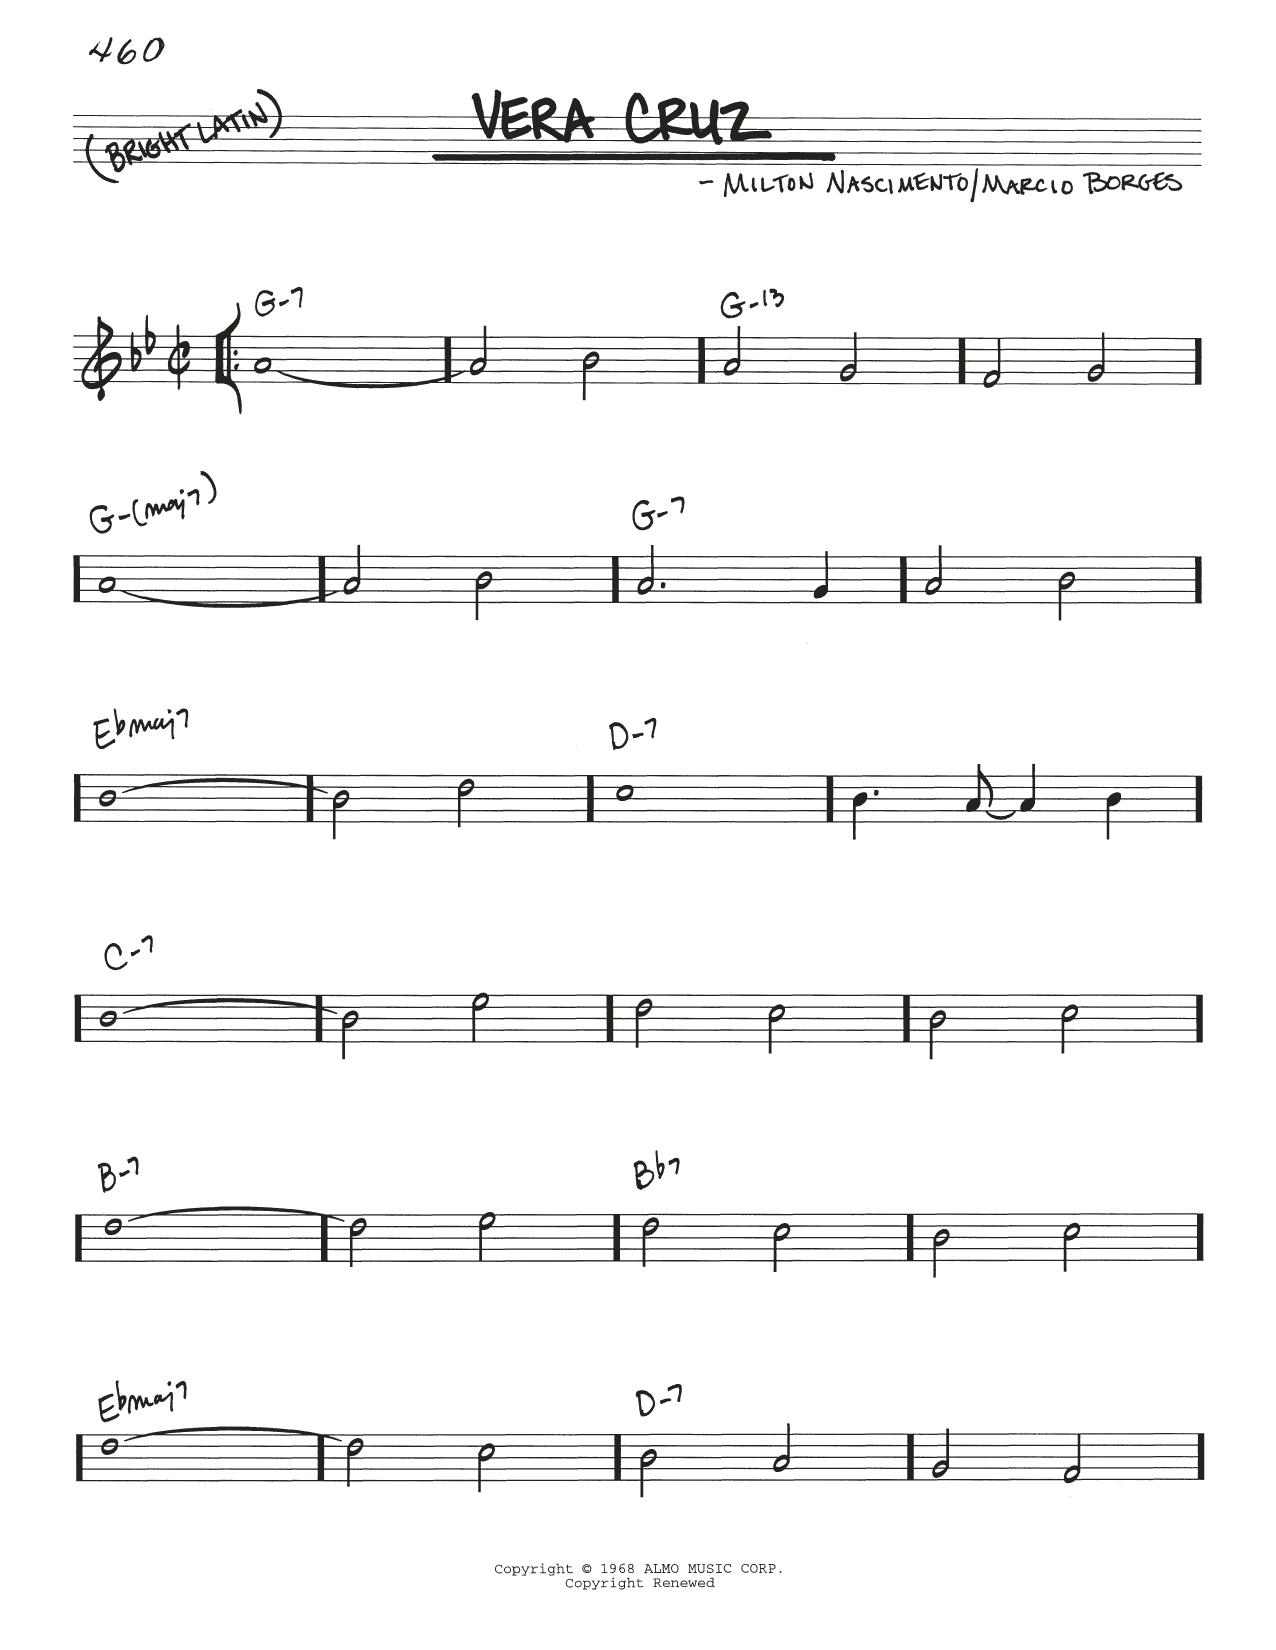 Milton Nascimento Vera Cruz Sheet Music Notes & Chords for Real Book – Melody & Chords - Download or Print PDF